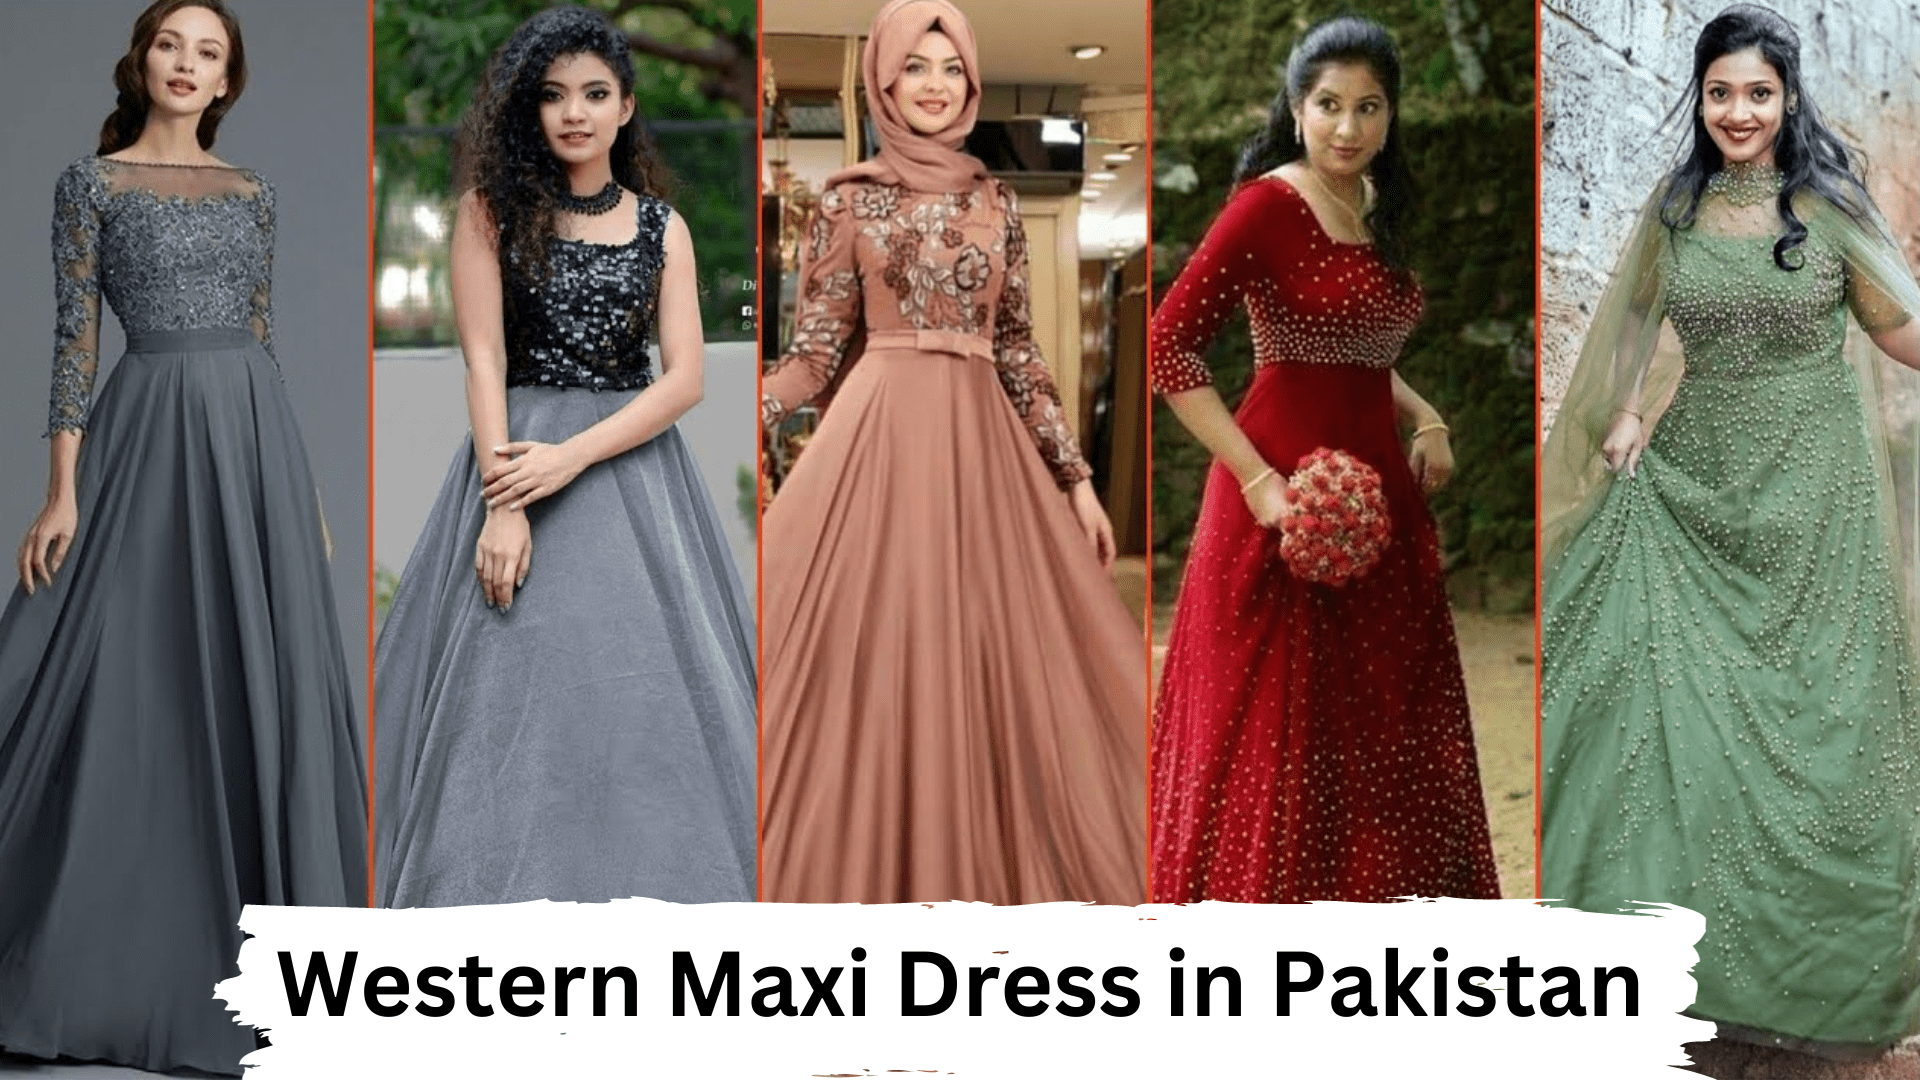 Western Maxi Dress in Pakistan is Rising